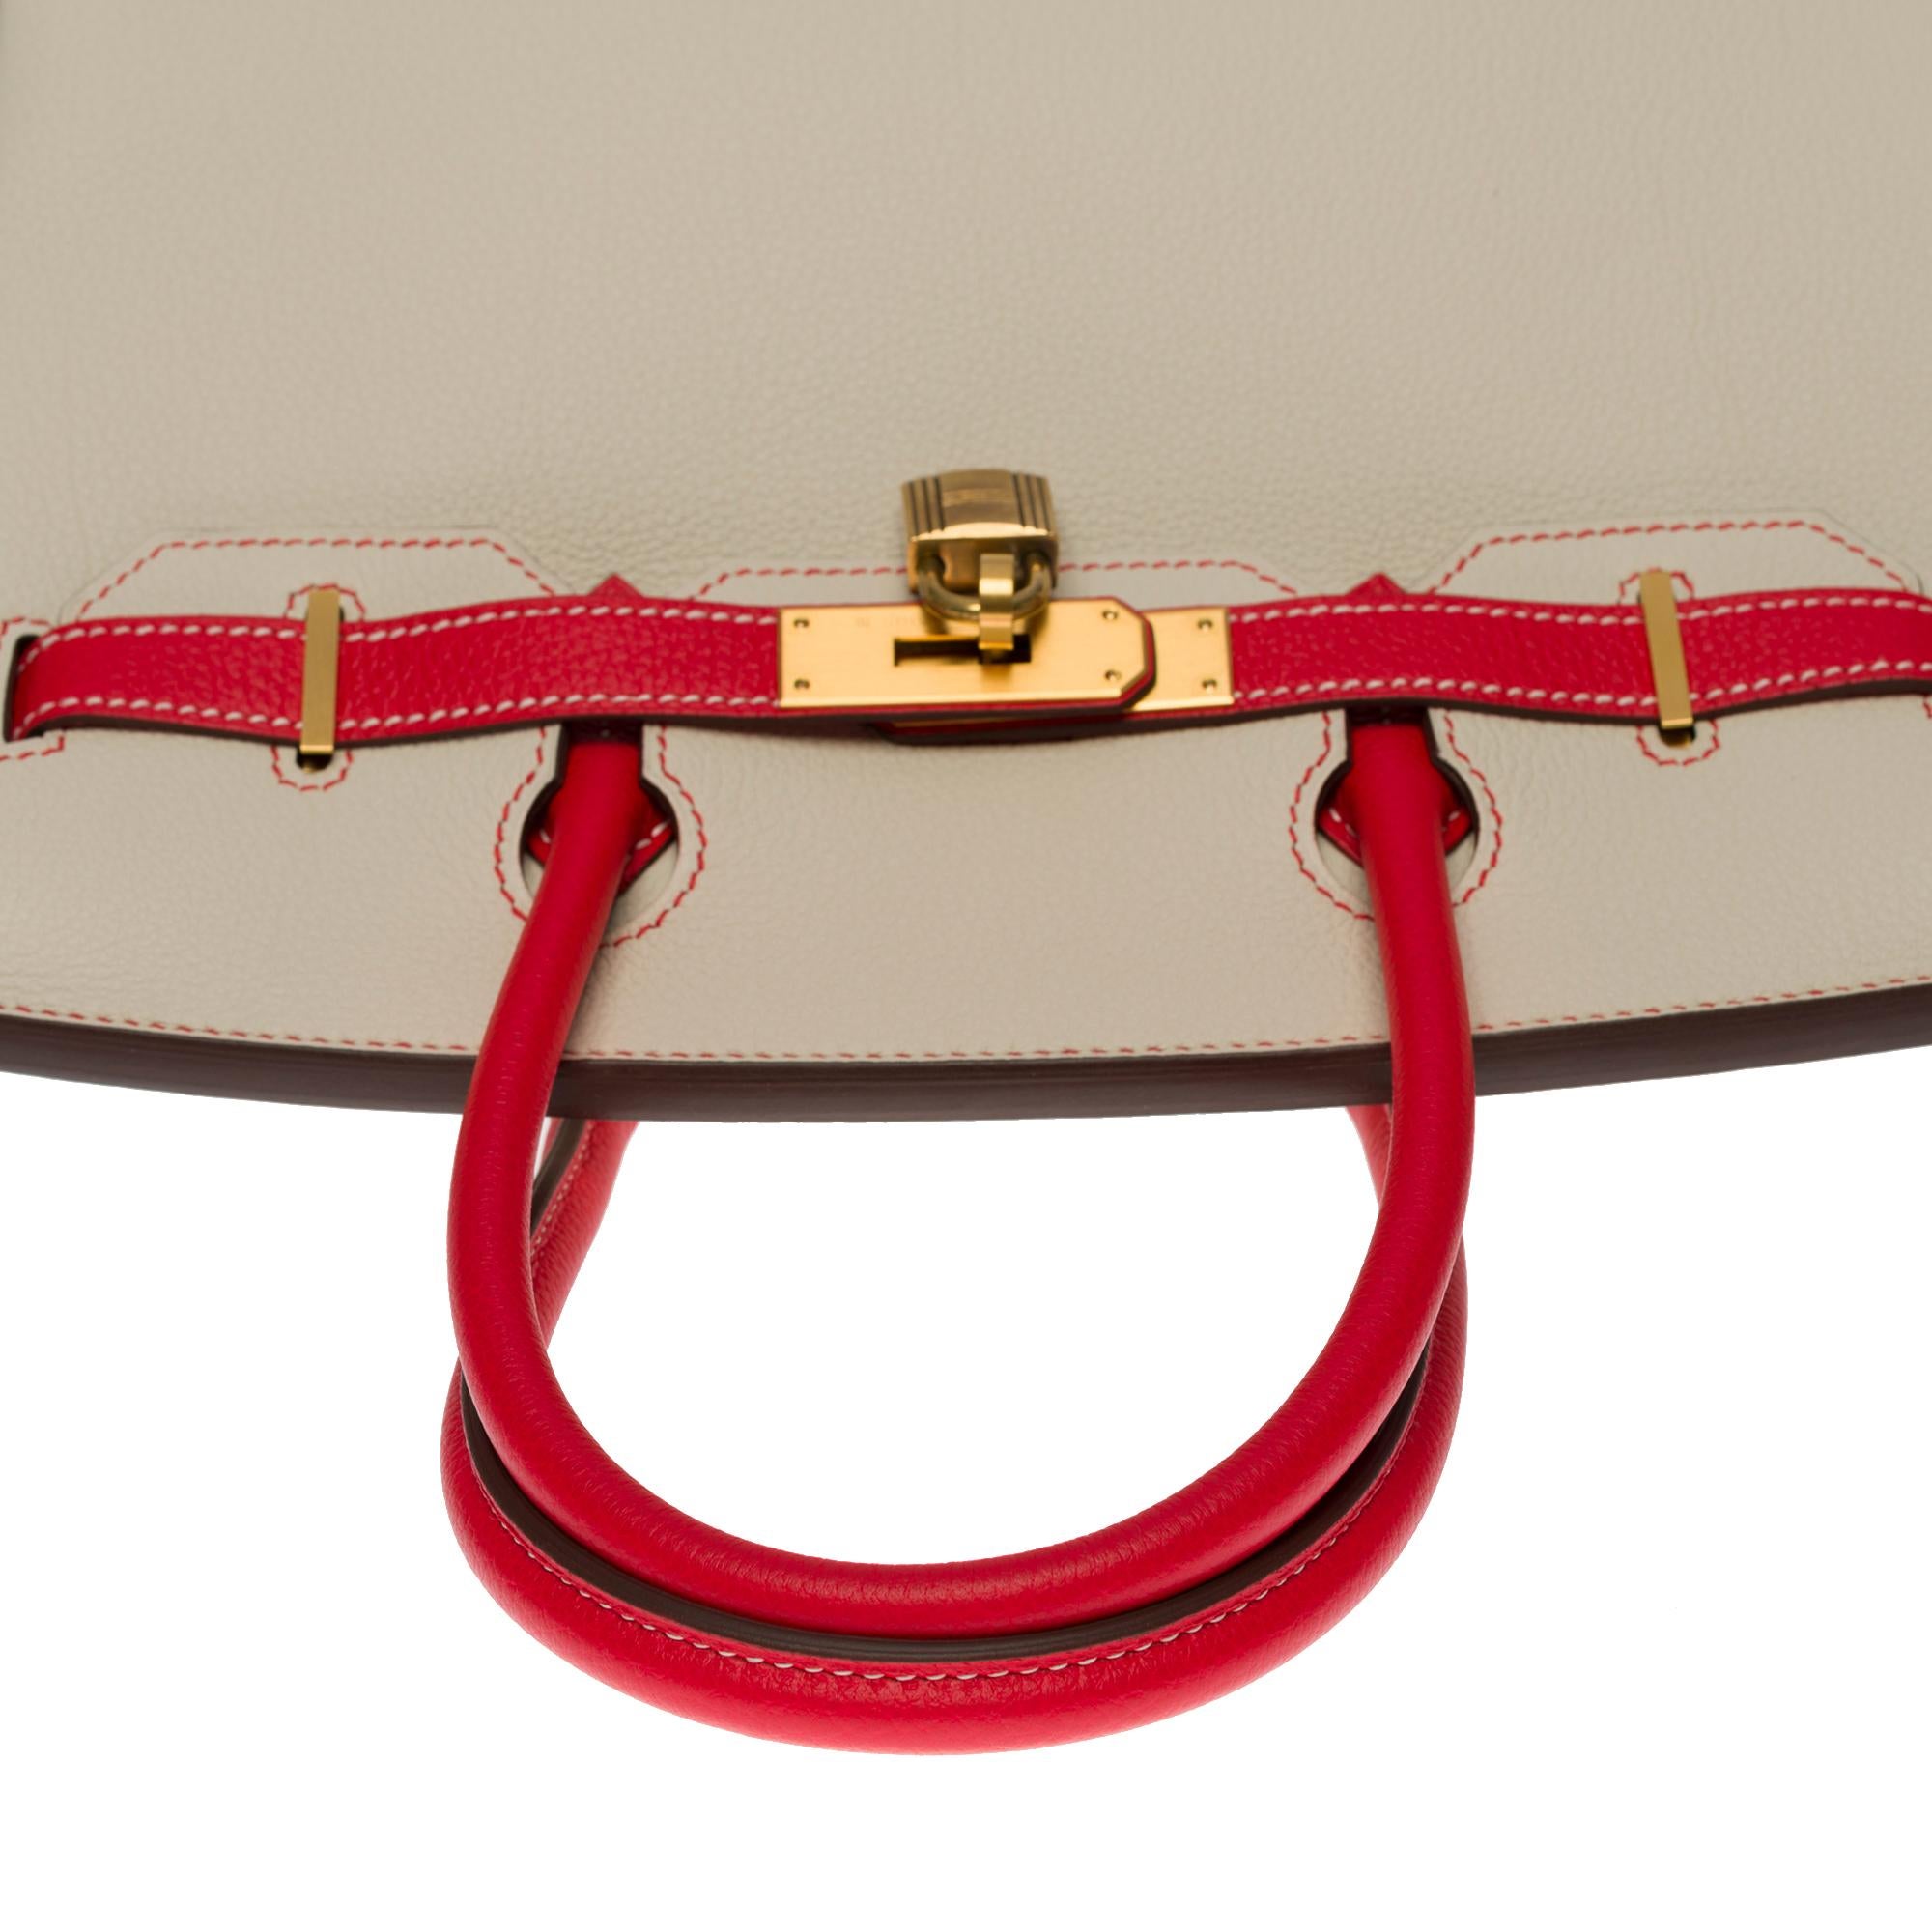  Hermès Birkin 30 HSS Special Order handbag in Craie/Red Togo leather, PHW 4